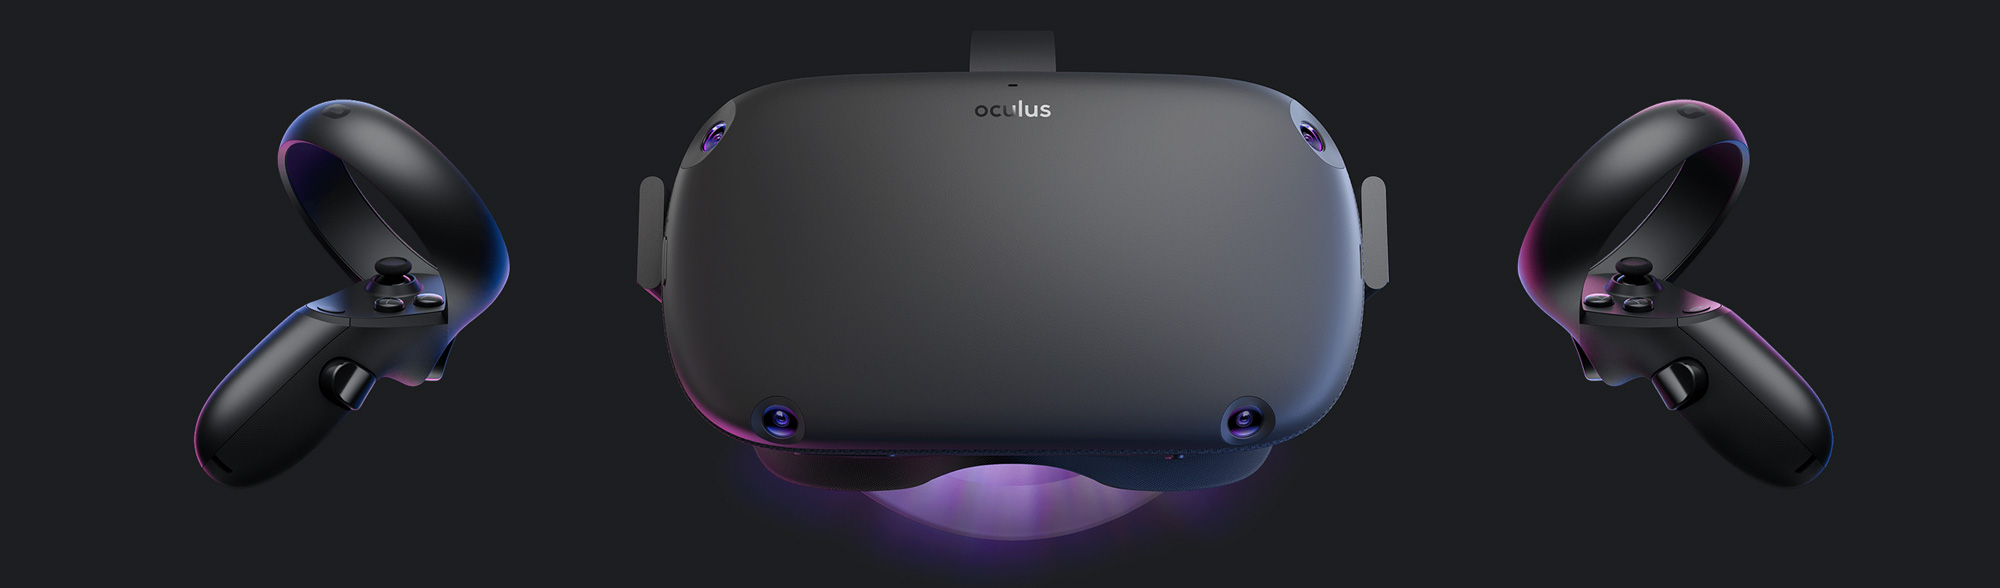 oculus development